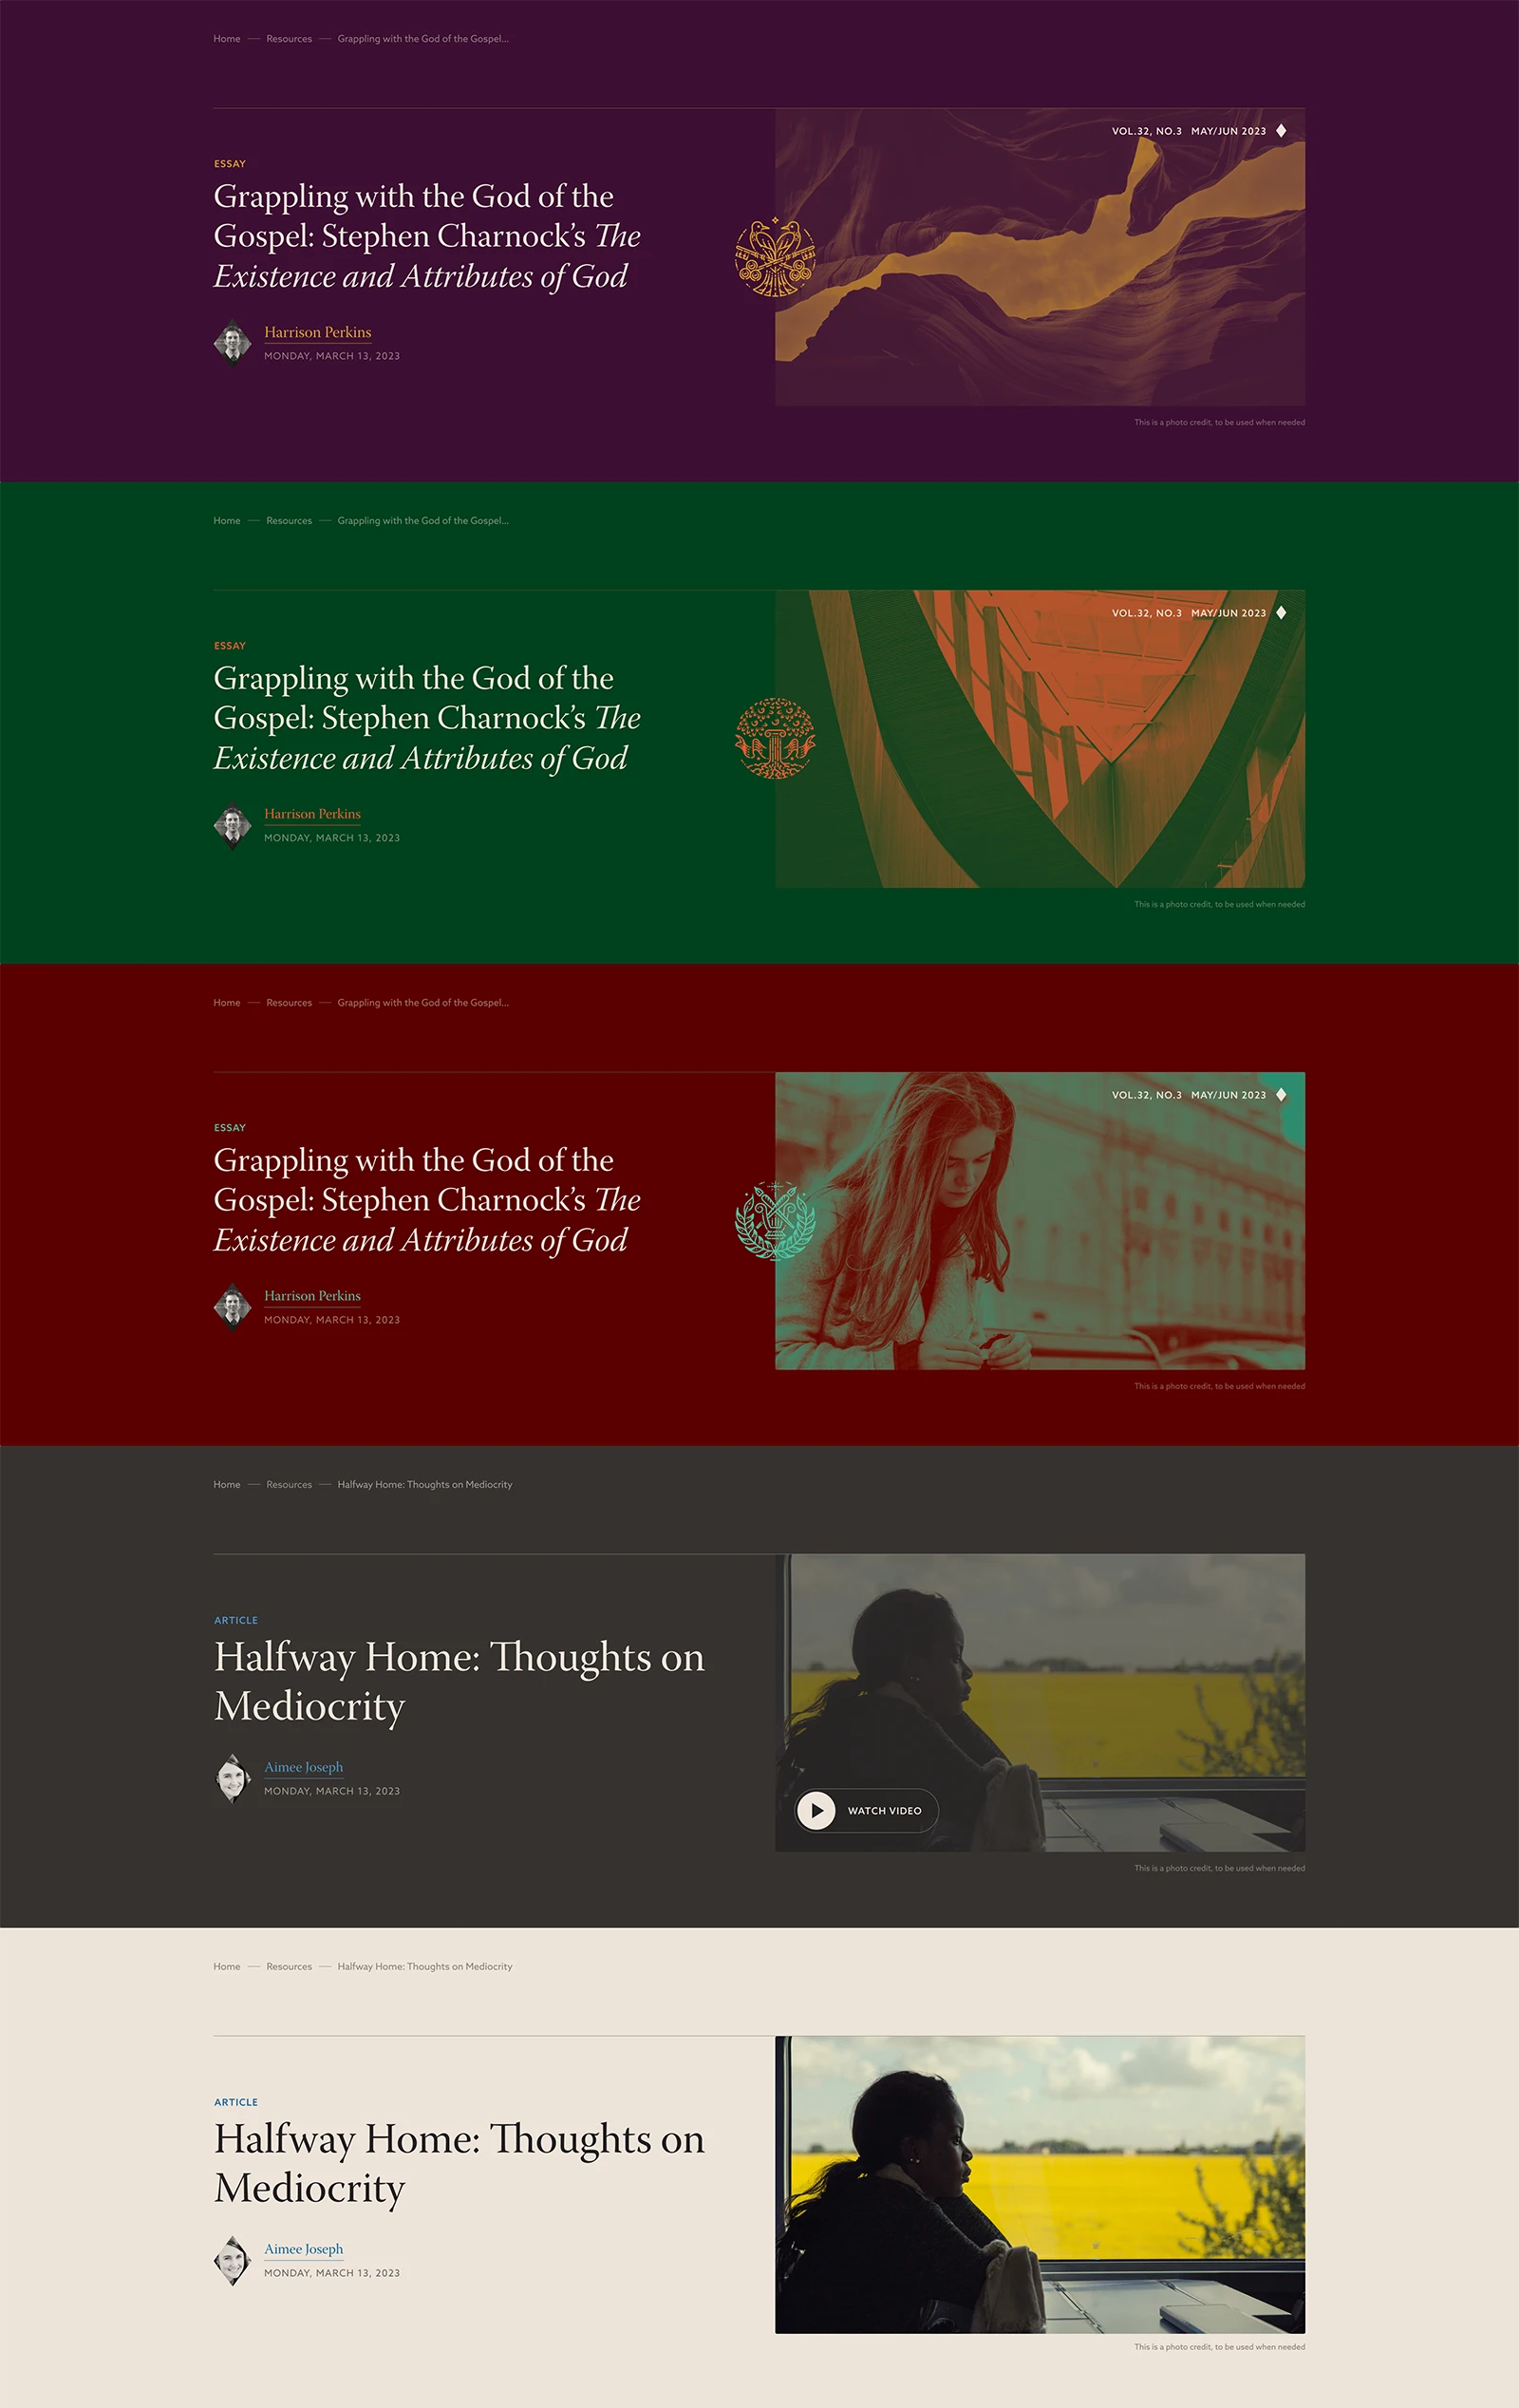 A screenshot of the Modern Reformation website